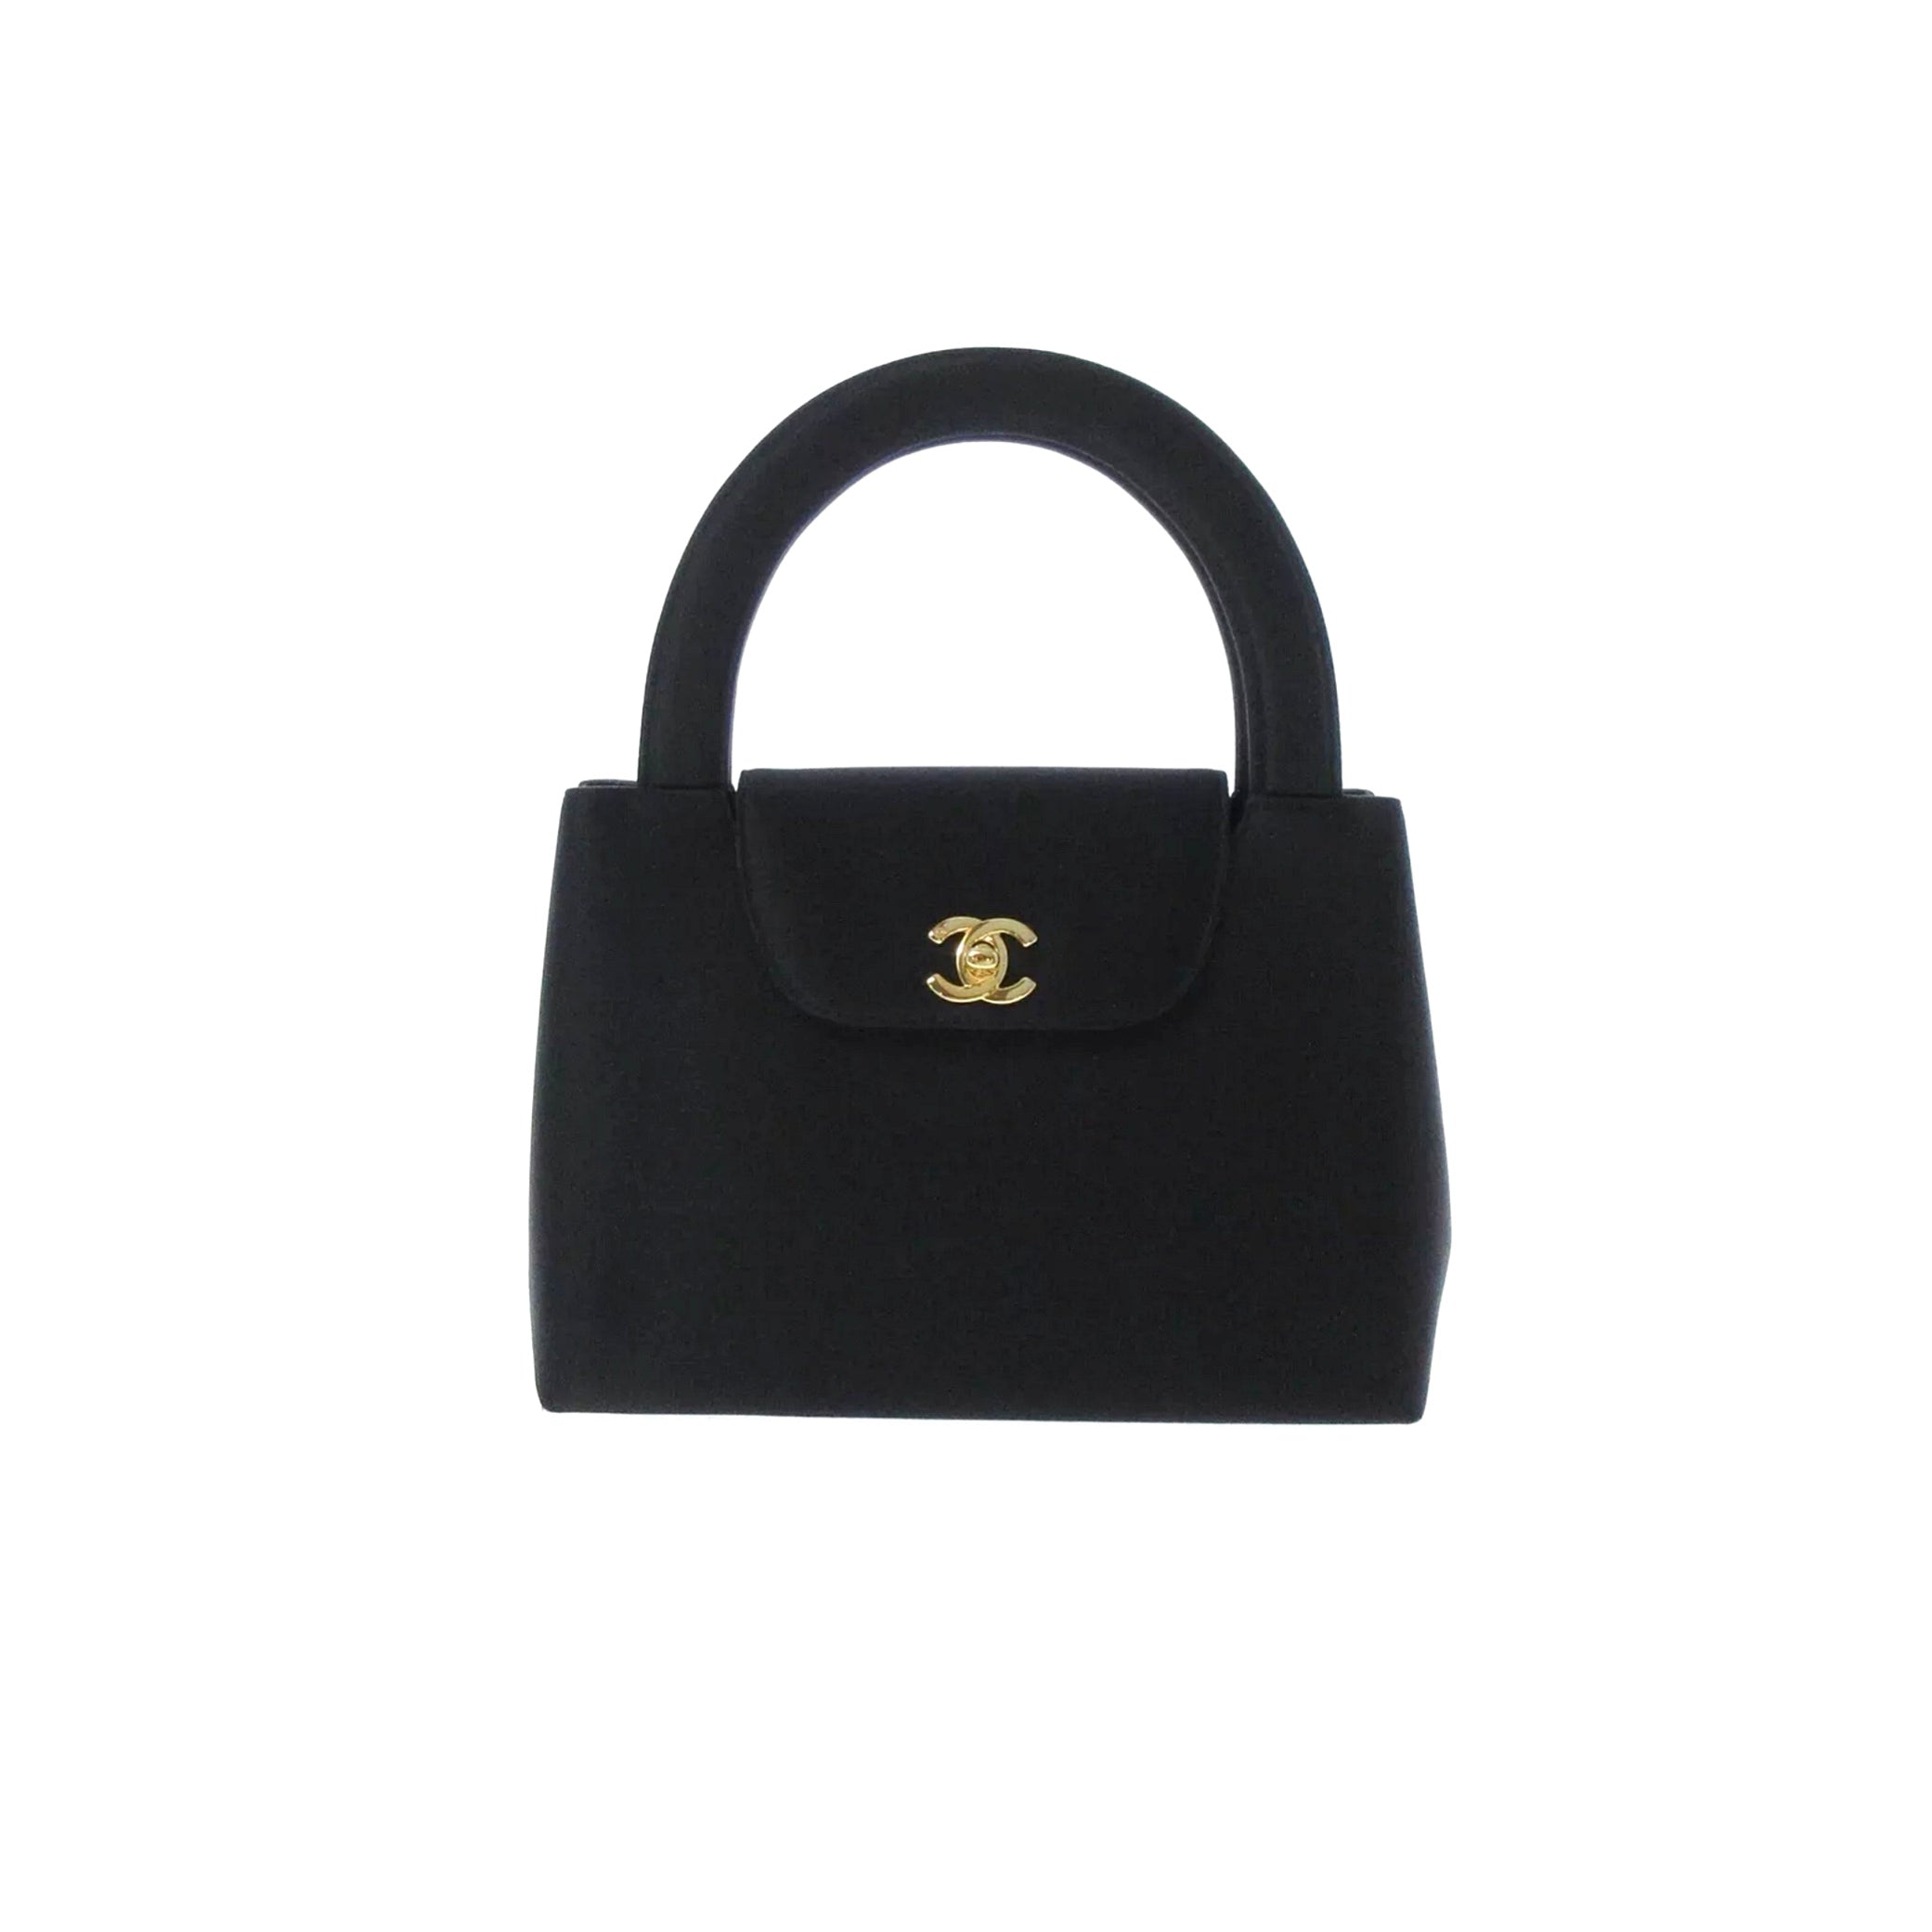 Treasures of NYC - Chanel Black Satin Mini Kelly Bag